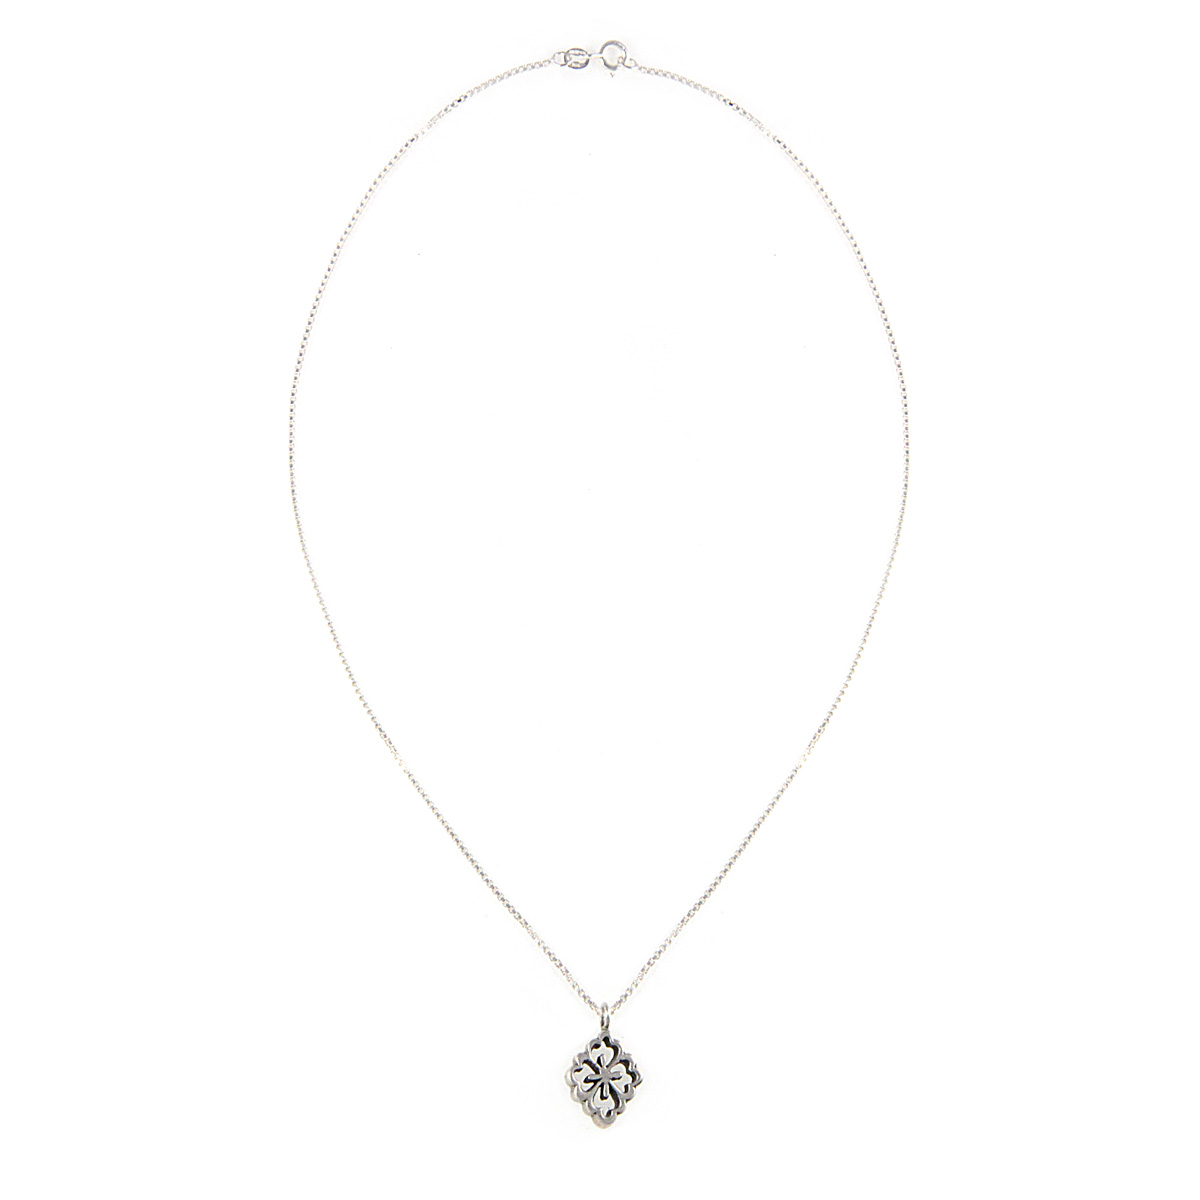 Sterling silver Diamond-shaped Flower pendant on 18